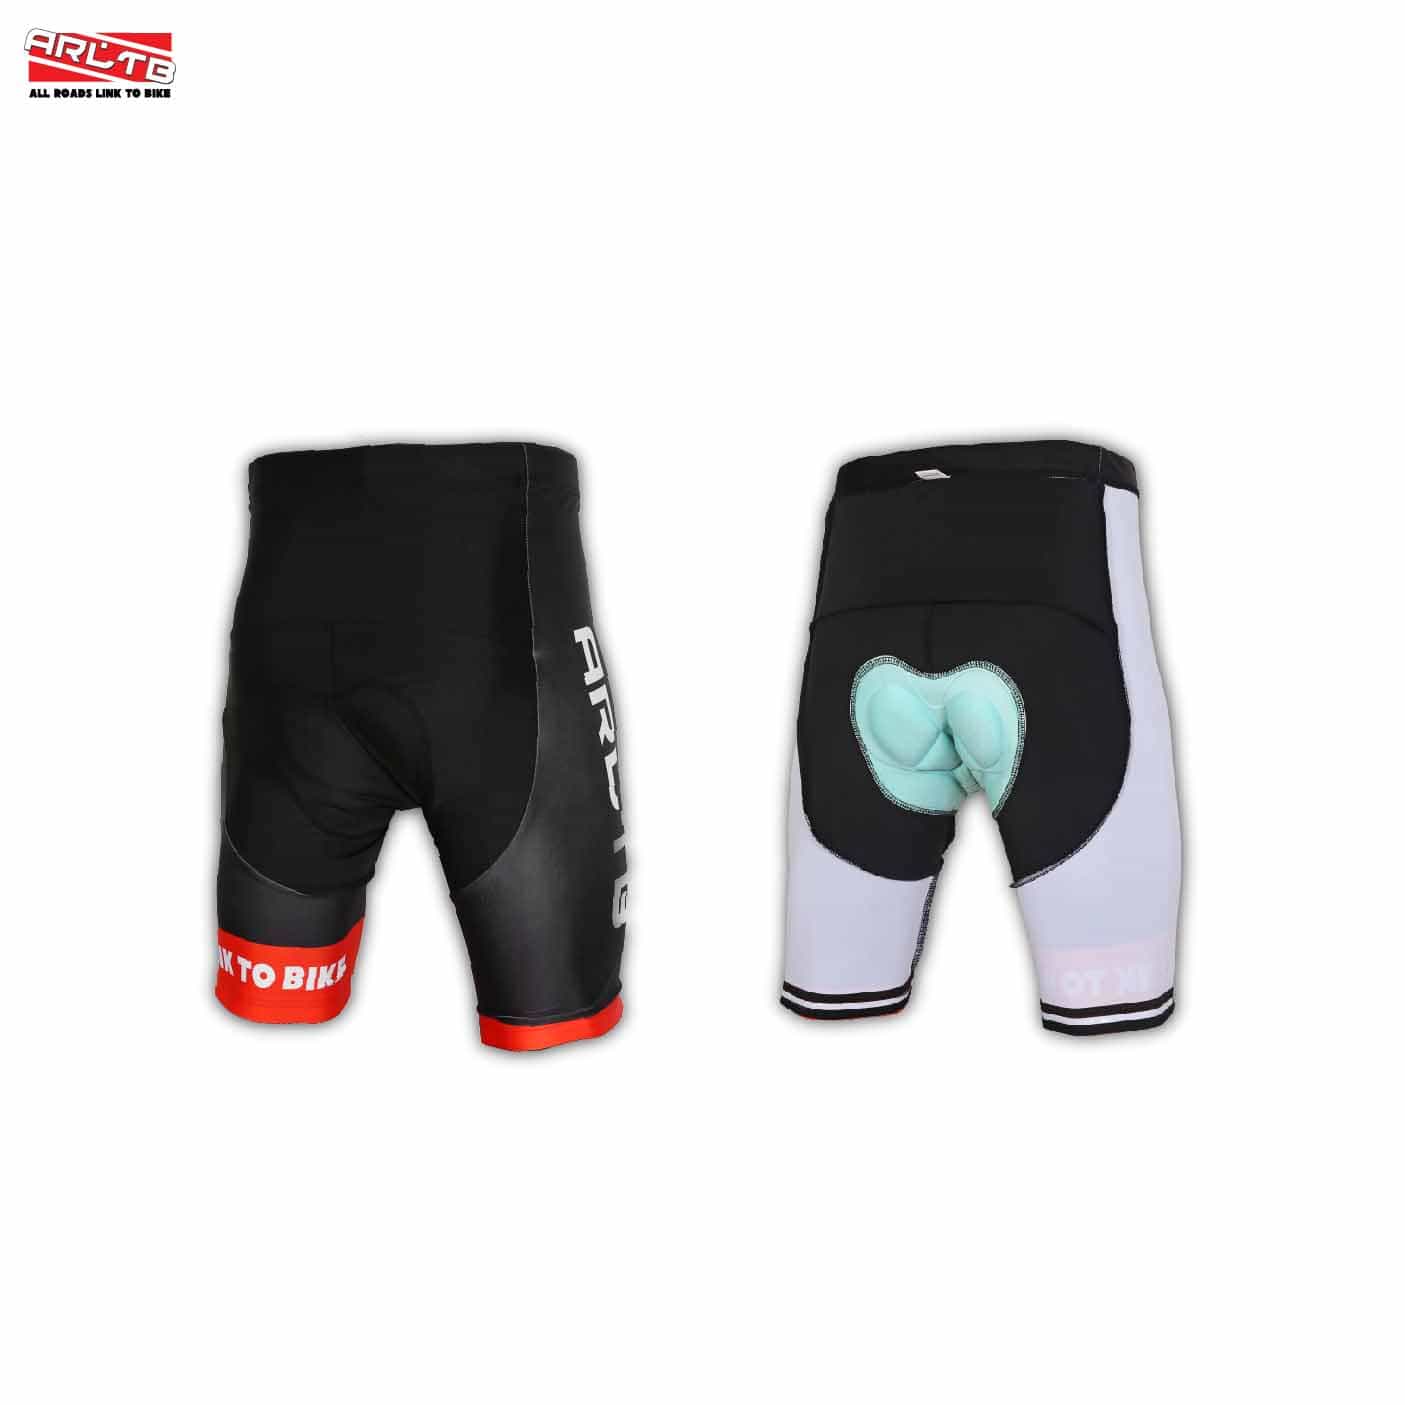 compression cycling shorts